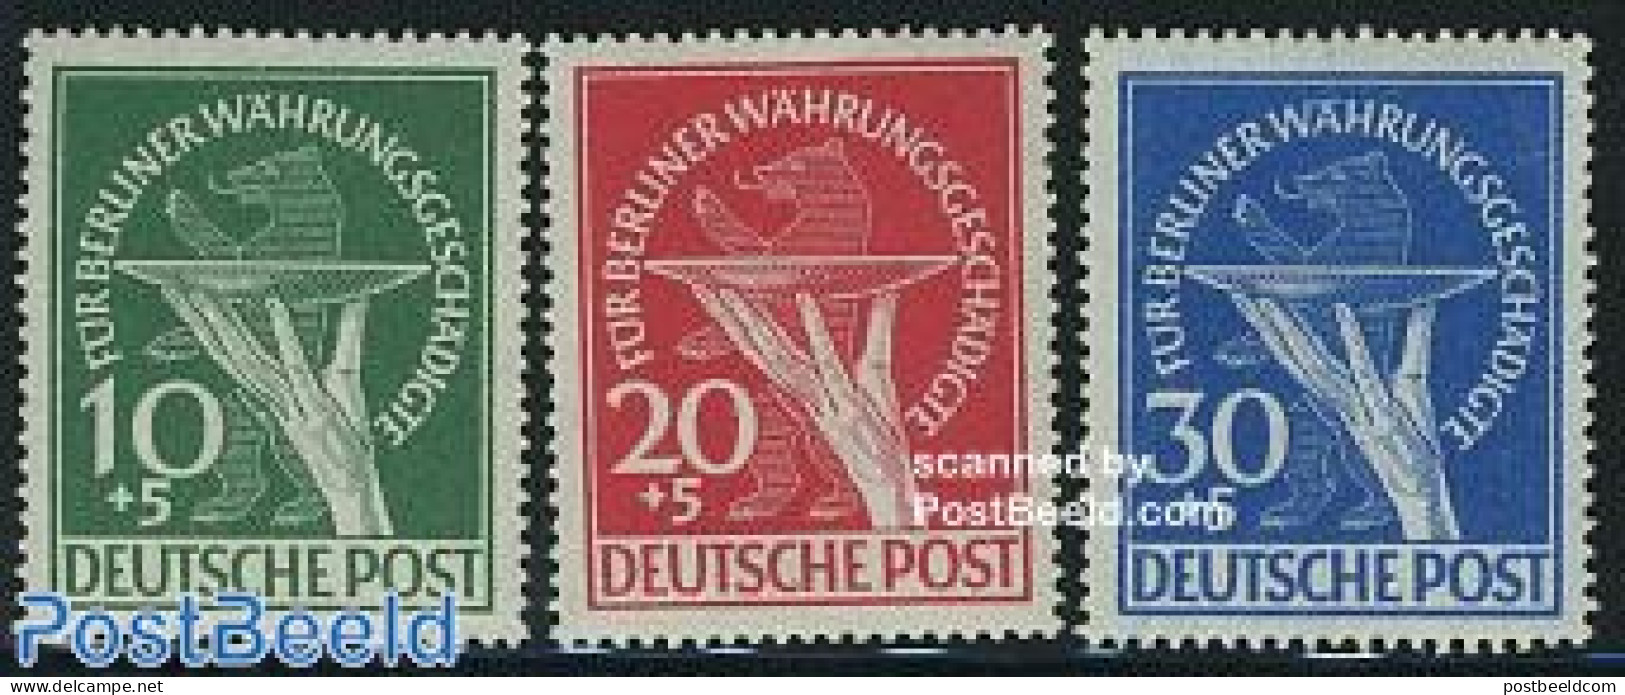 Germany, Berlin 1949 Berlin Fund 3v, Mint NH - Ongebruikt